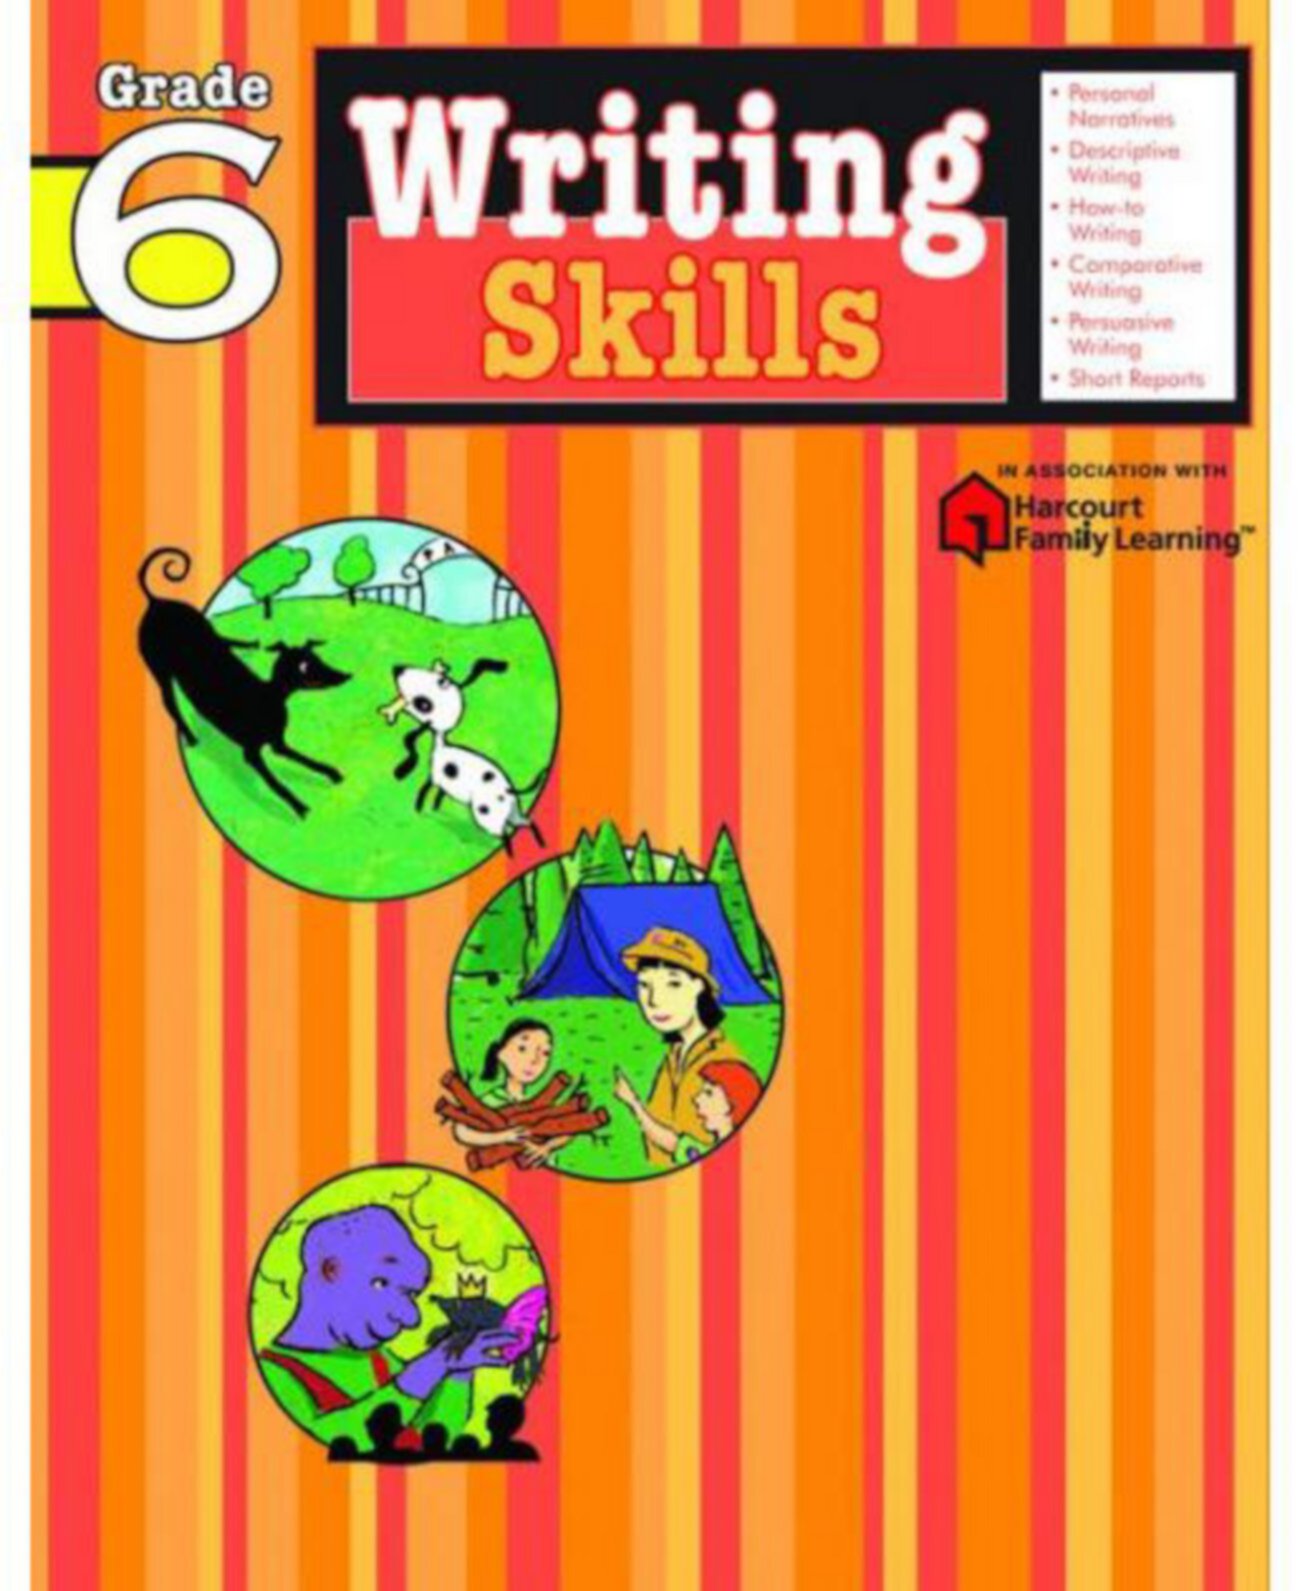 Навыки письма: 6 класс (серия «Навыки письма Flash Kids») от редакторов Flash Kids Barnes & Noble